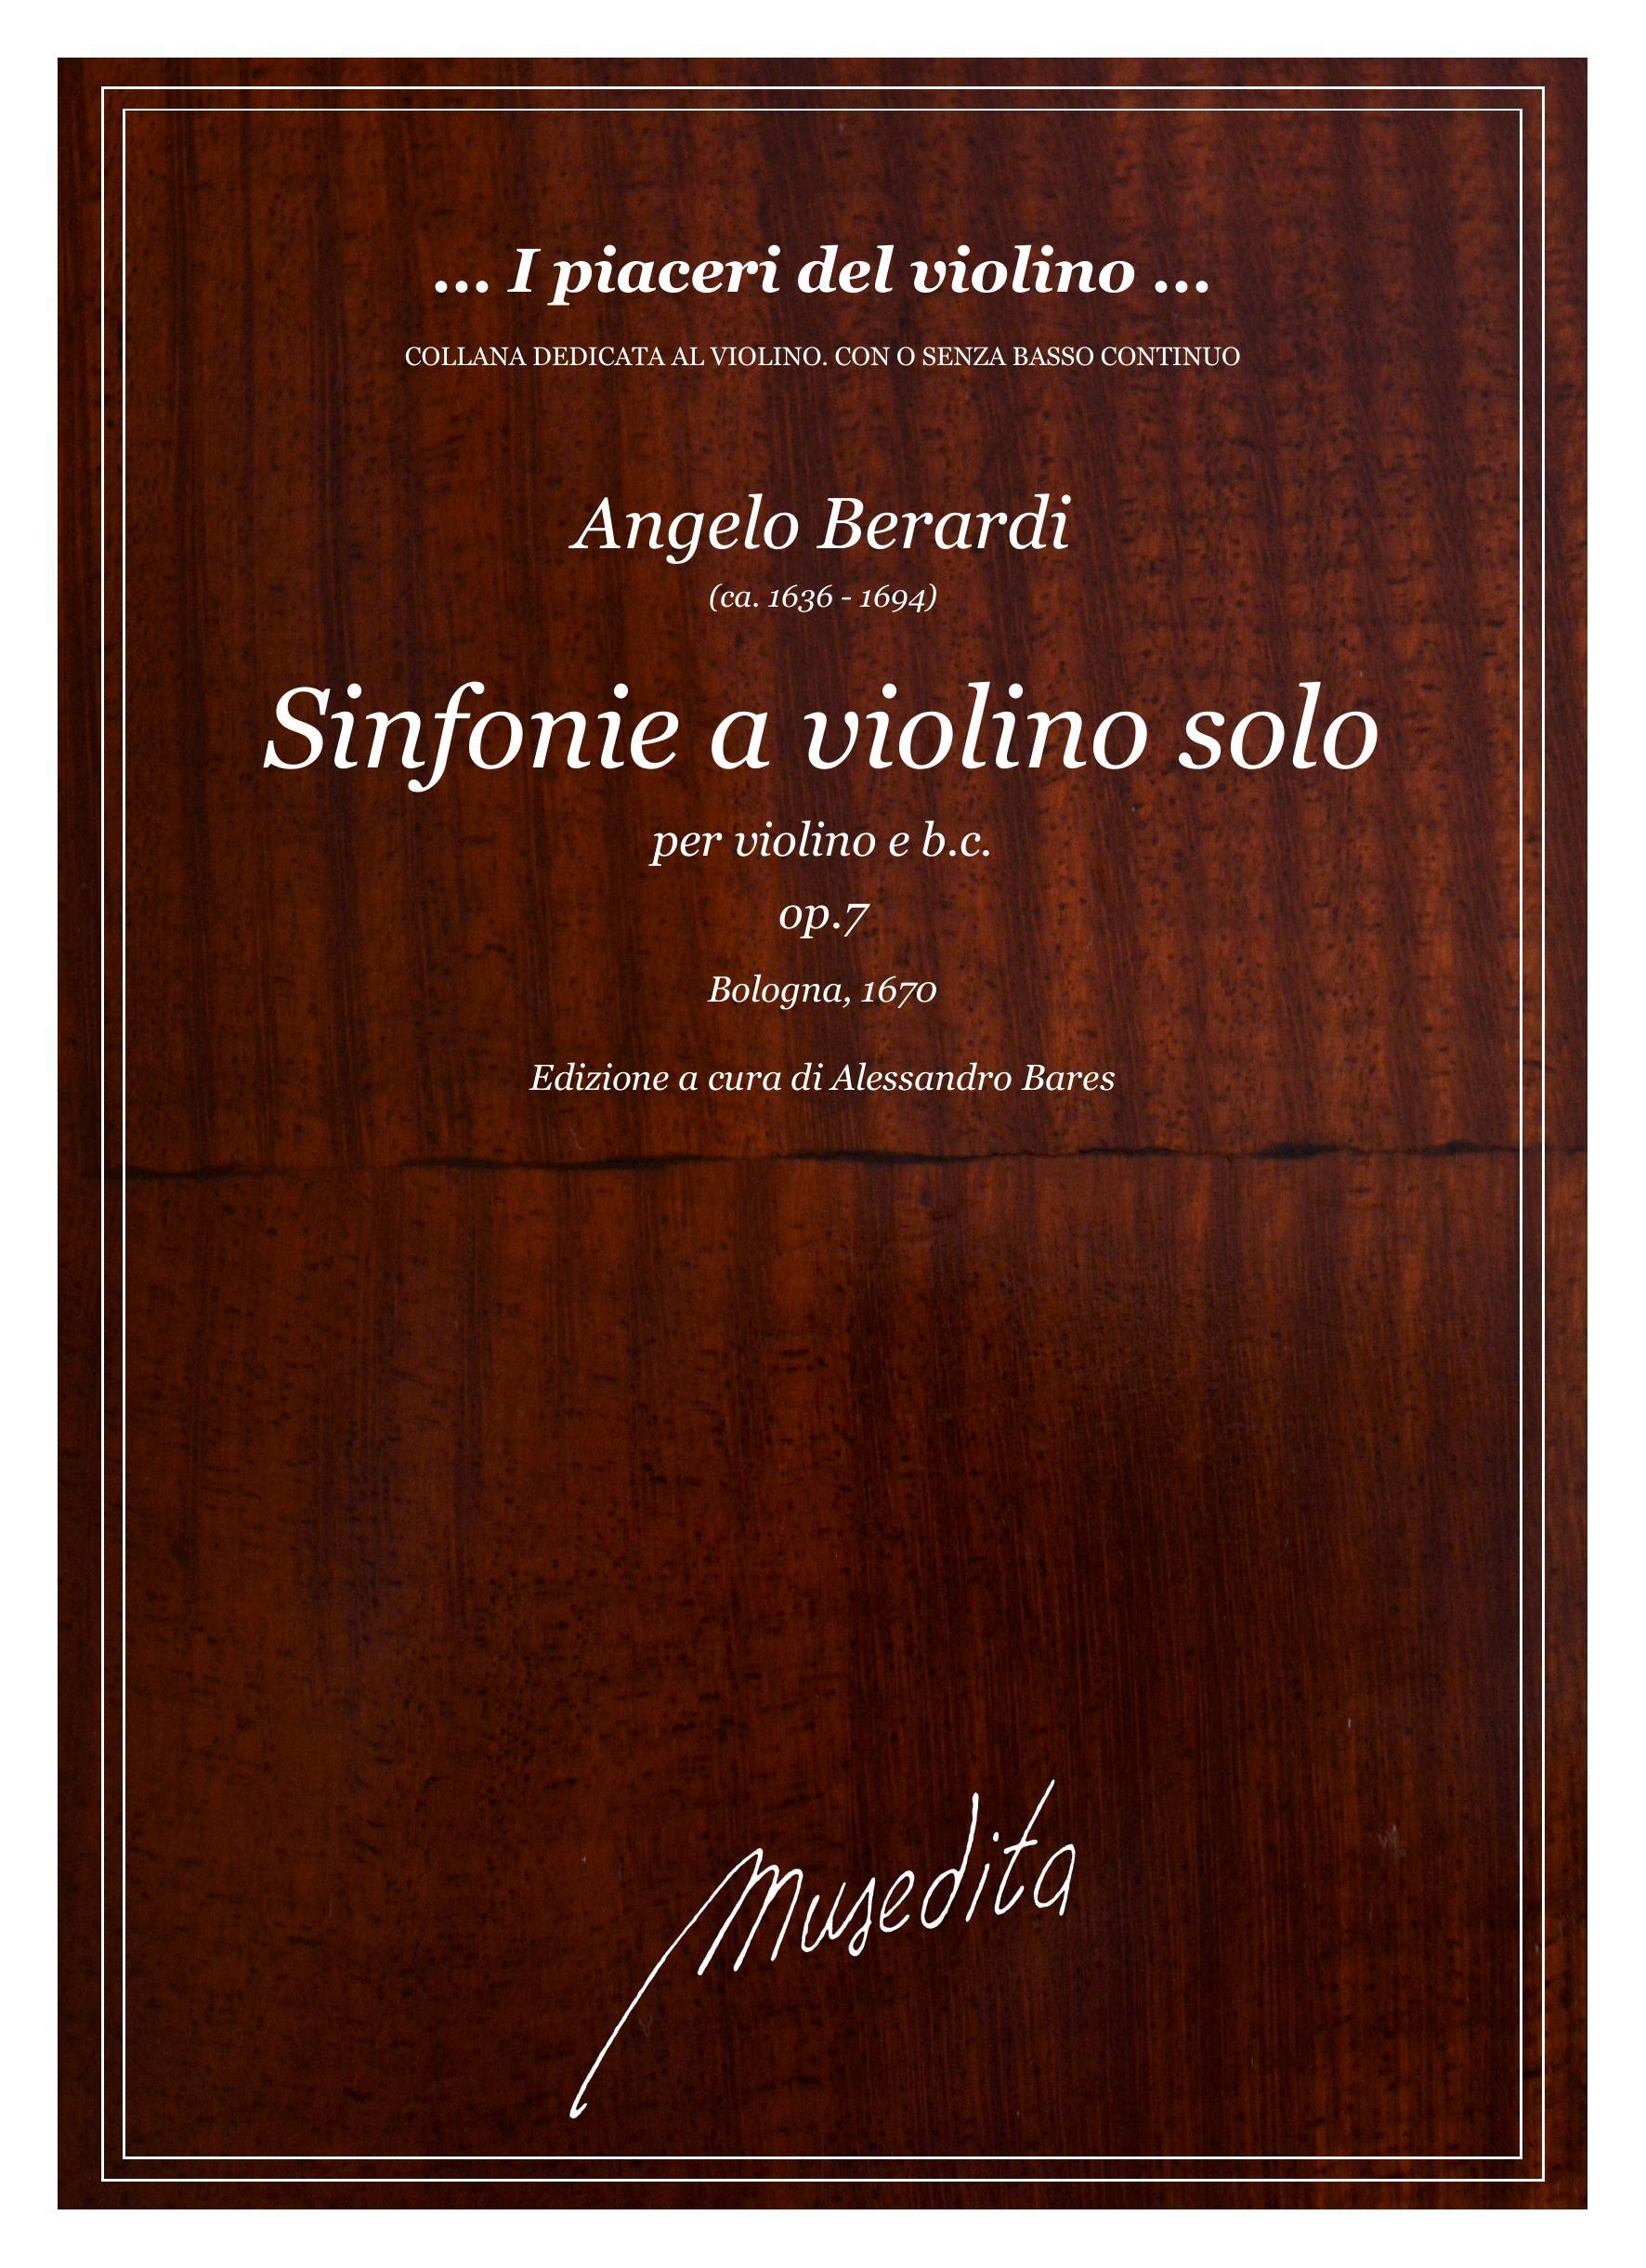 A.Berardi: Sinfonie a violino solo op.7 (Bologna, 1670)